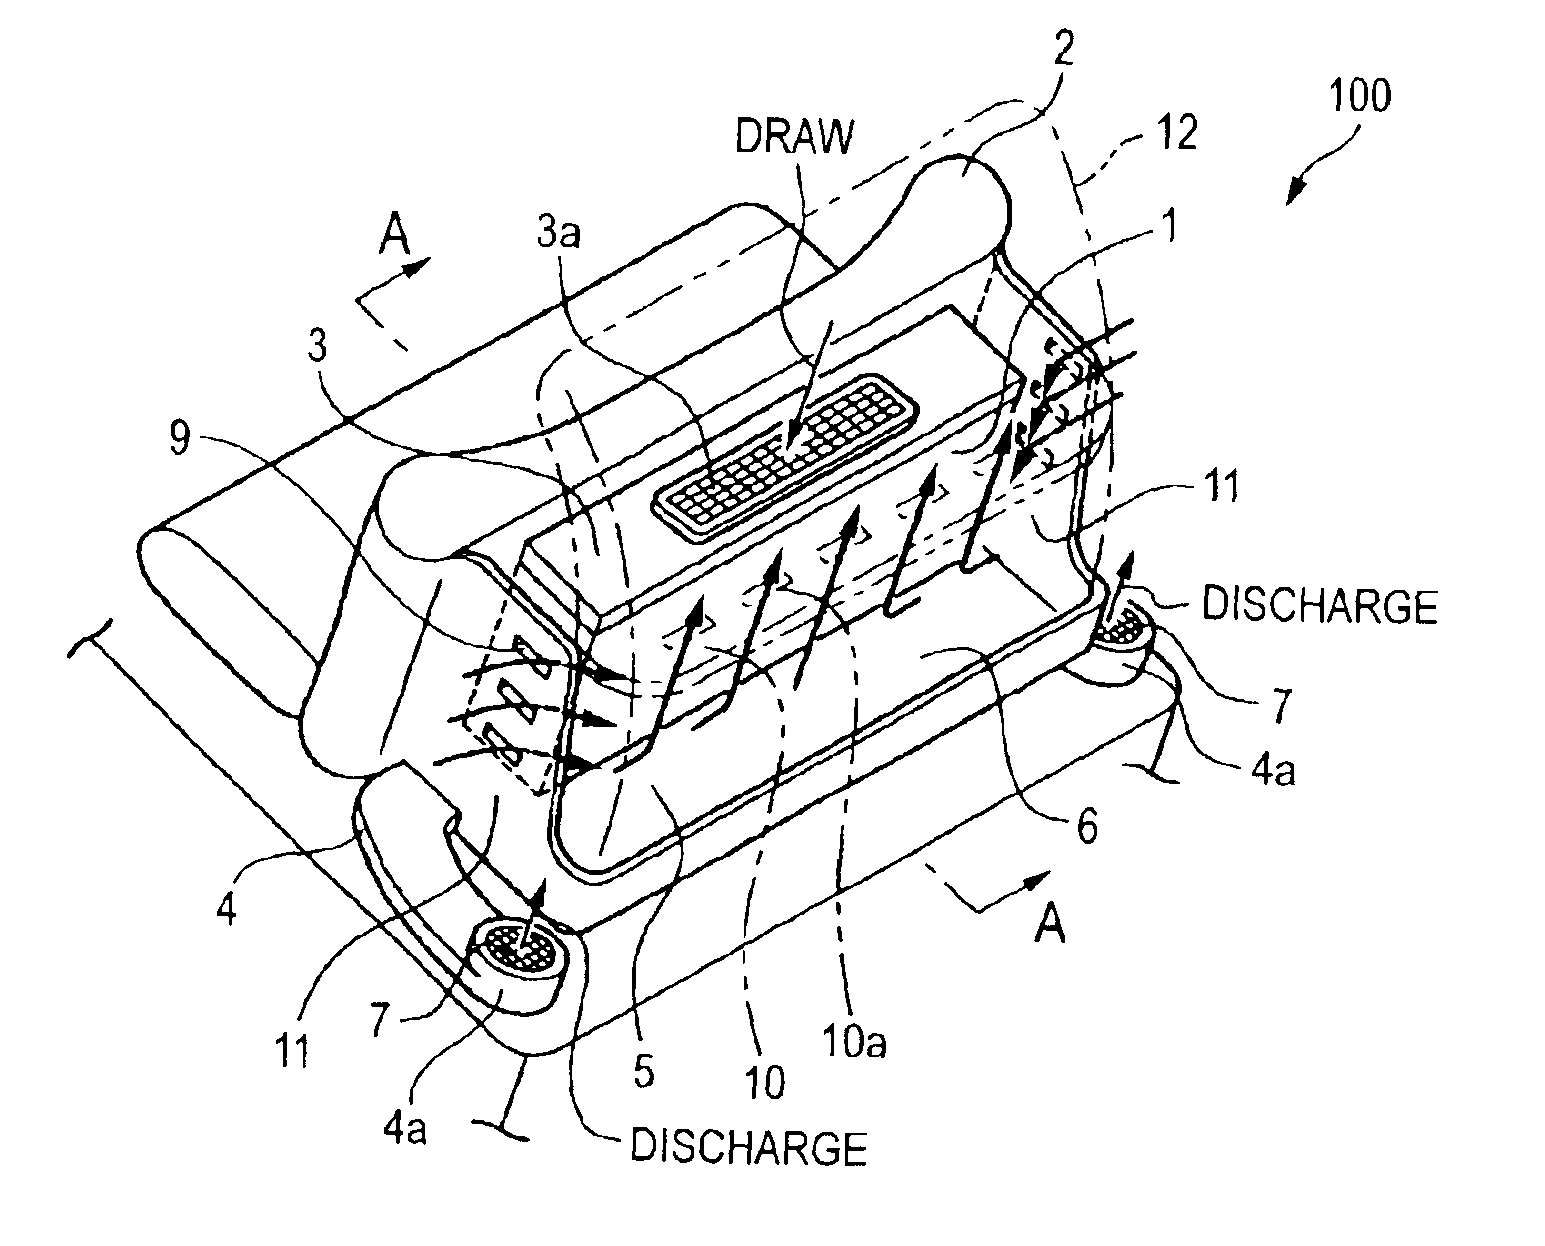 Arrangement of cooling apparatus